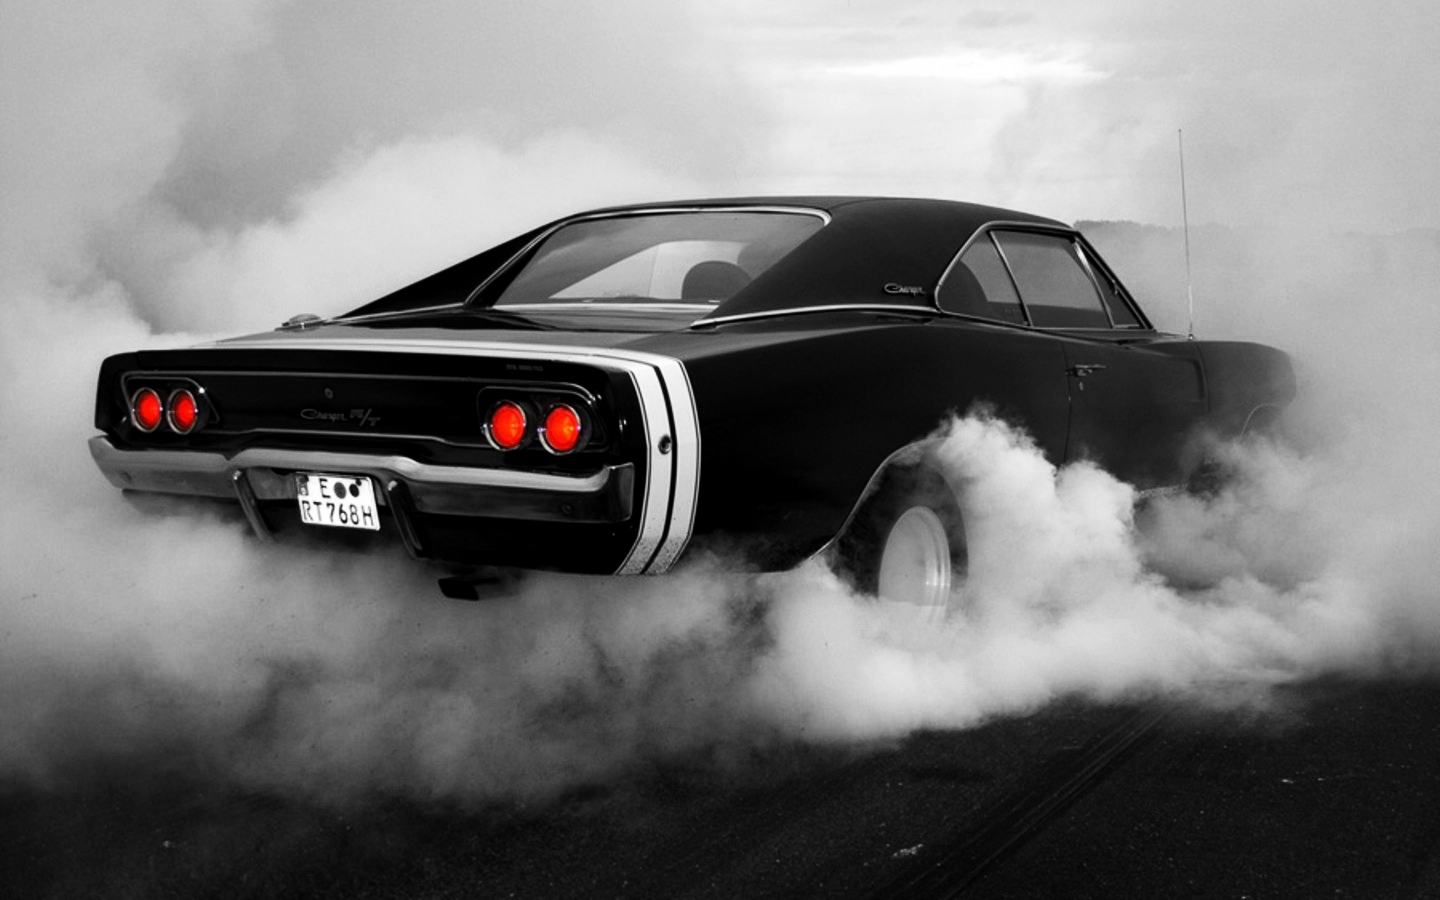  rod smoke muscle car tuning wallpaper 1440x900 29182 WallpaperUP